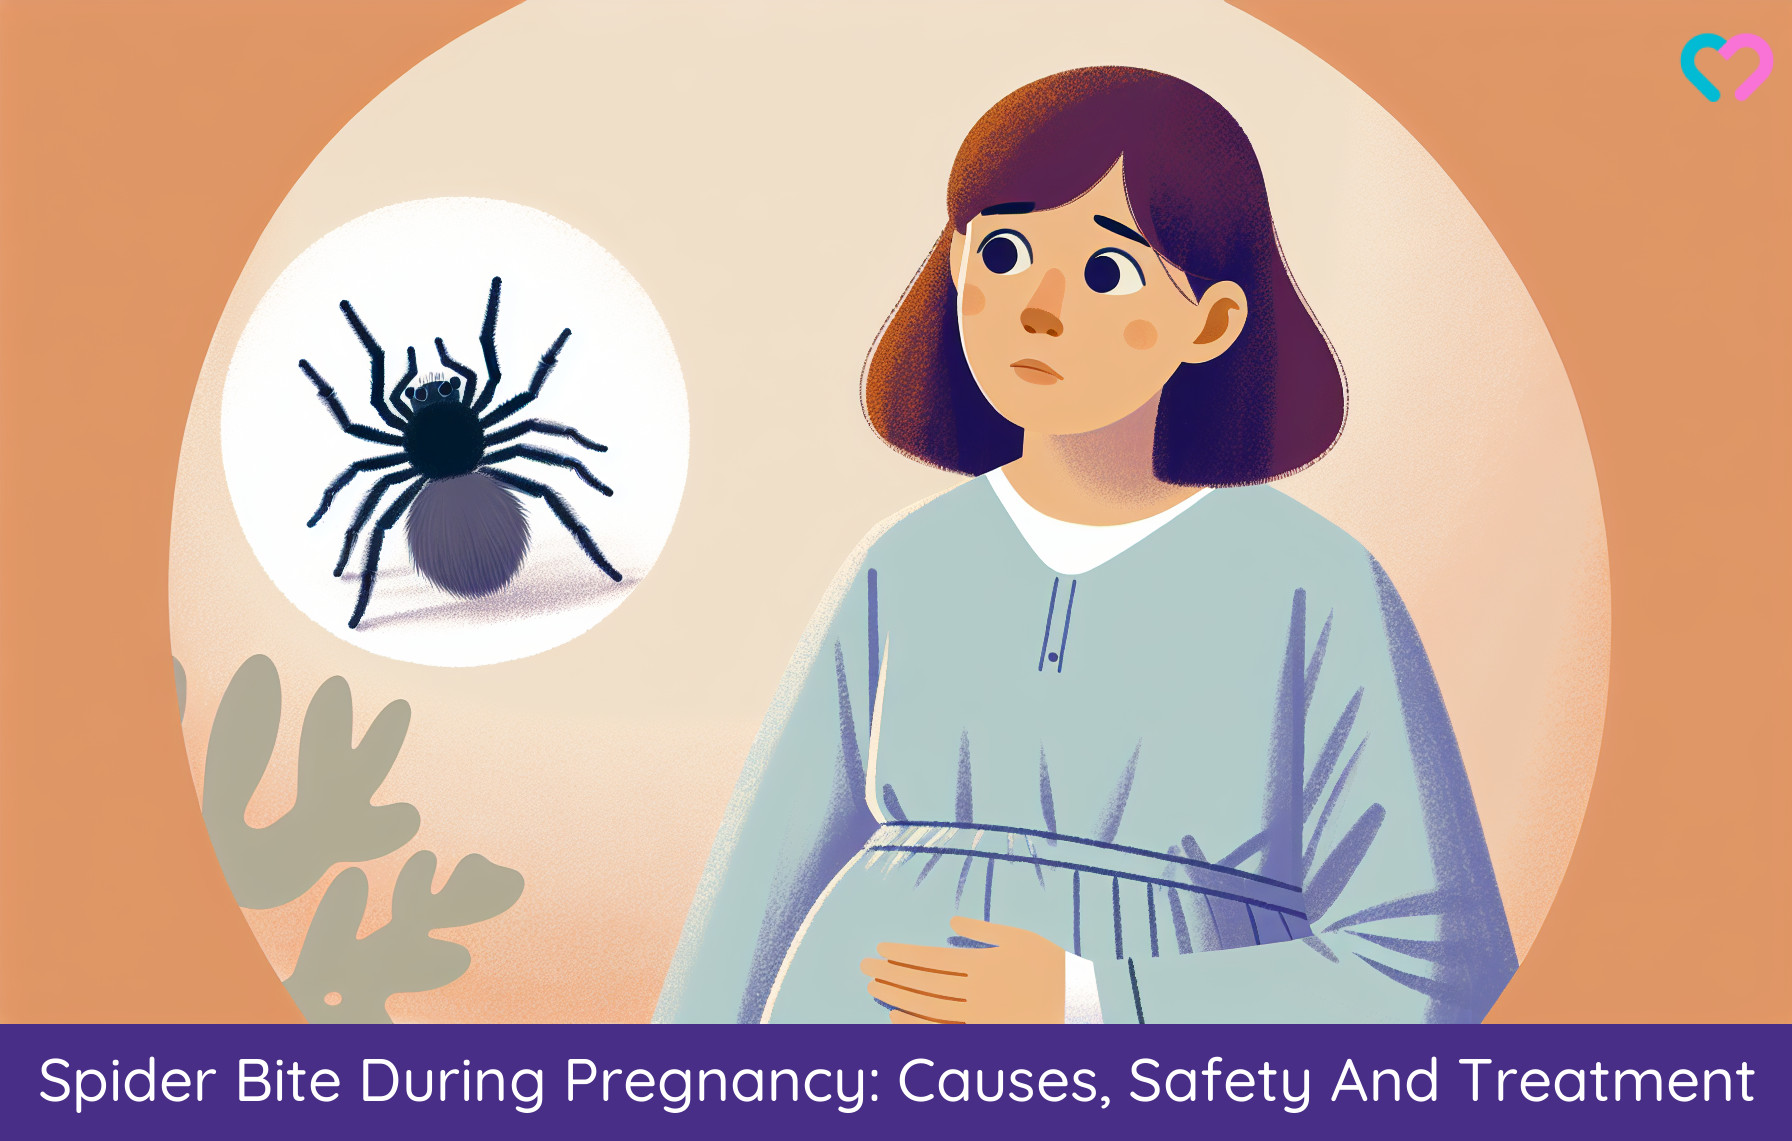 Spider Bite When Pregnant_illustration